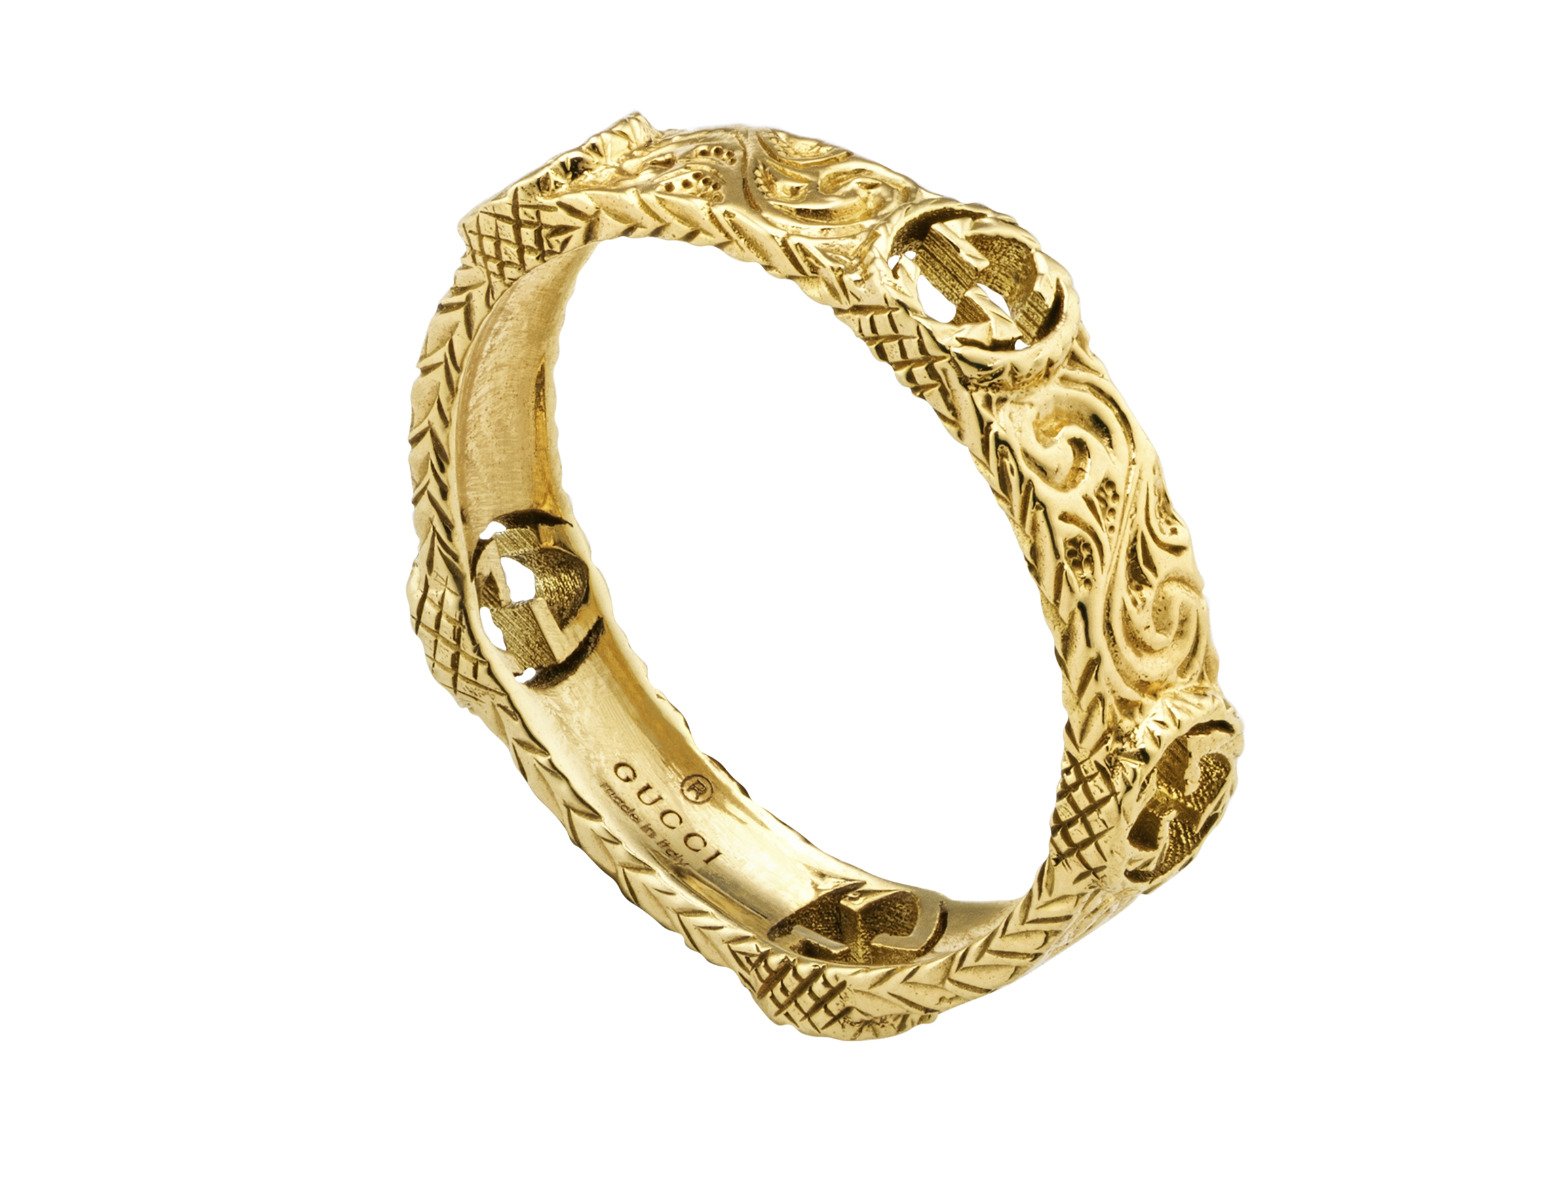 Gucci "Interlocking G" 18kt Yellow Gold Engraved Ring (6.5)